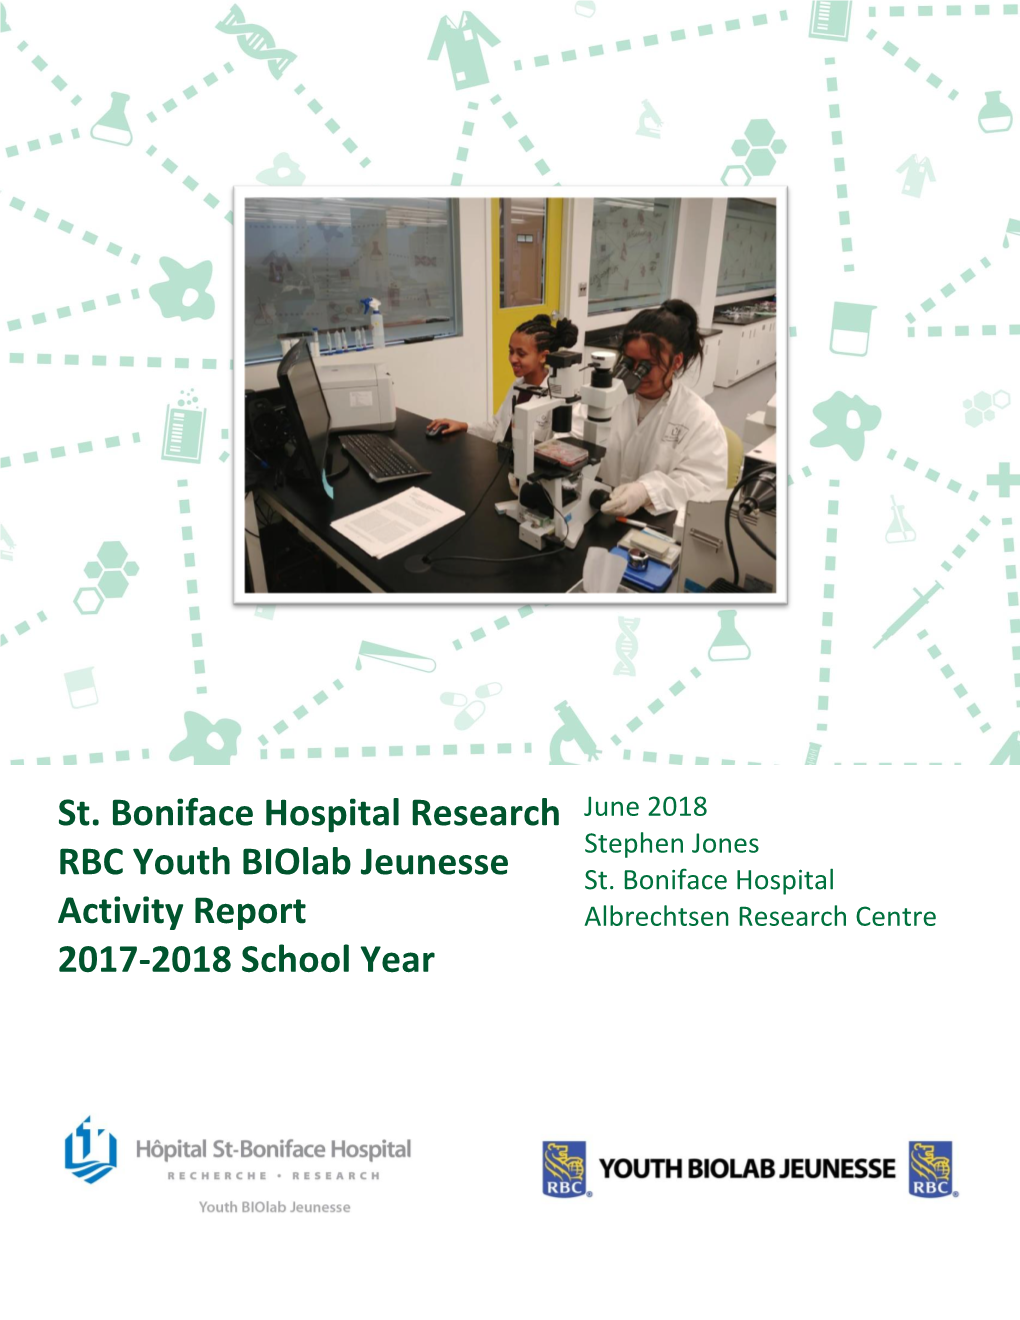 St. Boniface Hospital Research RBC Youth Biolab Jeunesse Activity